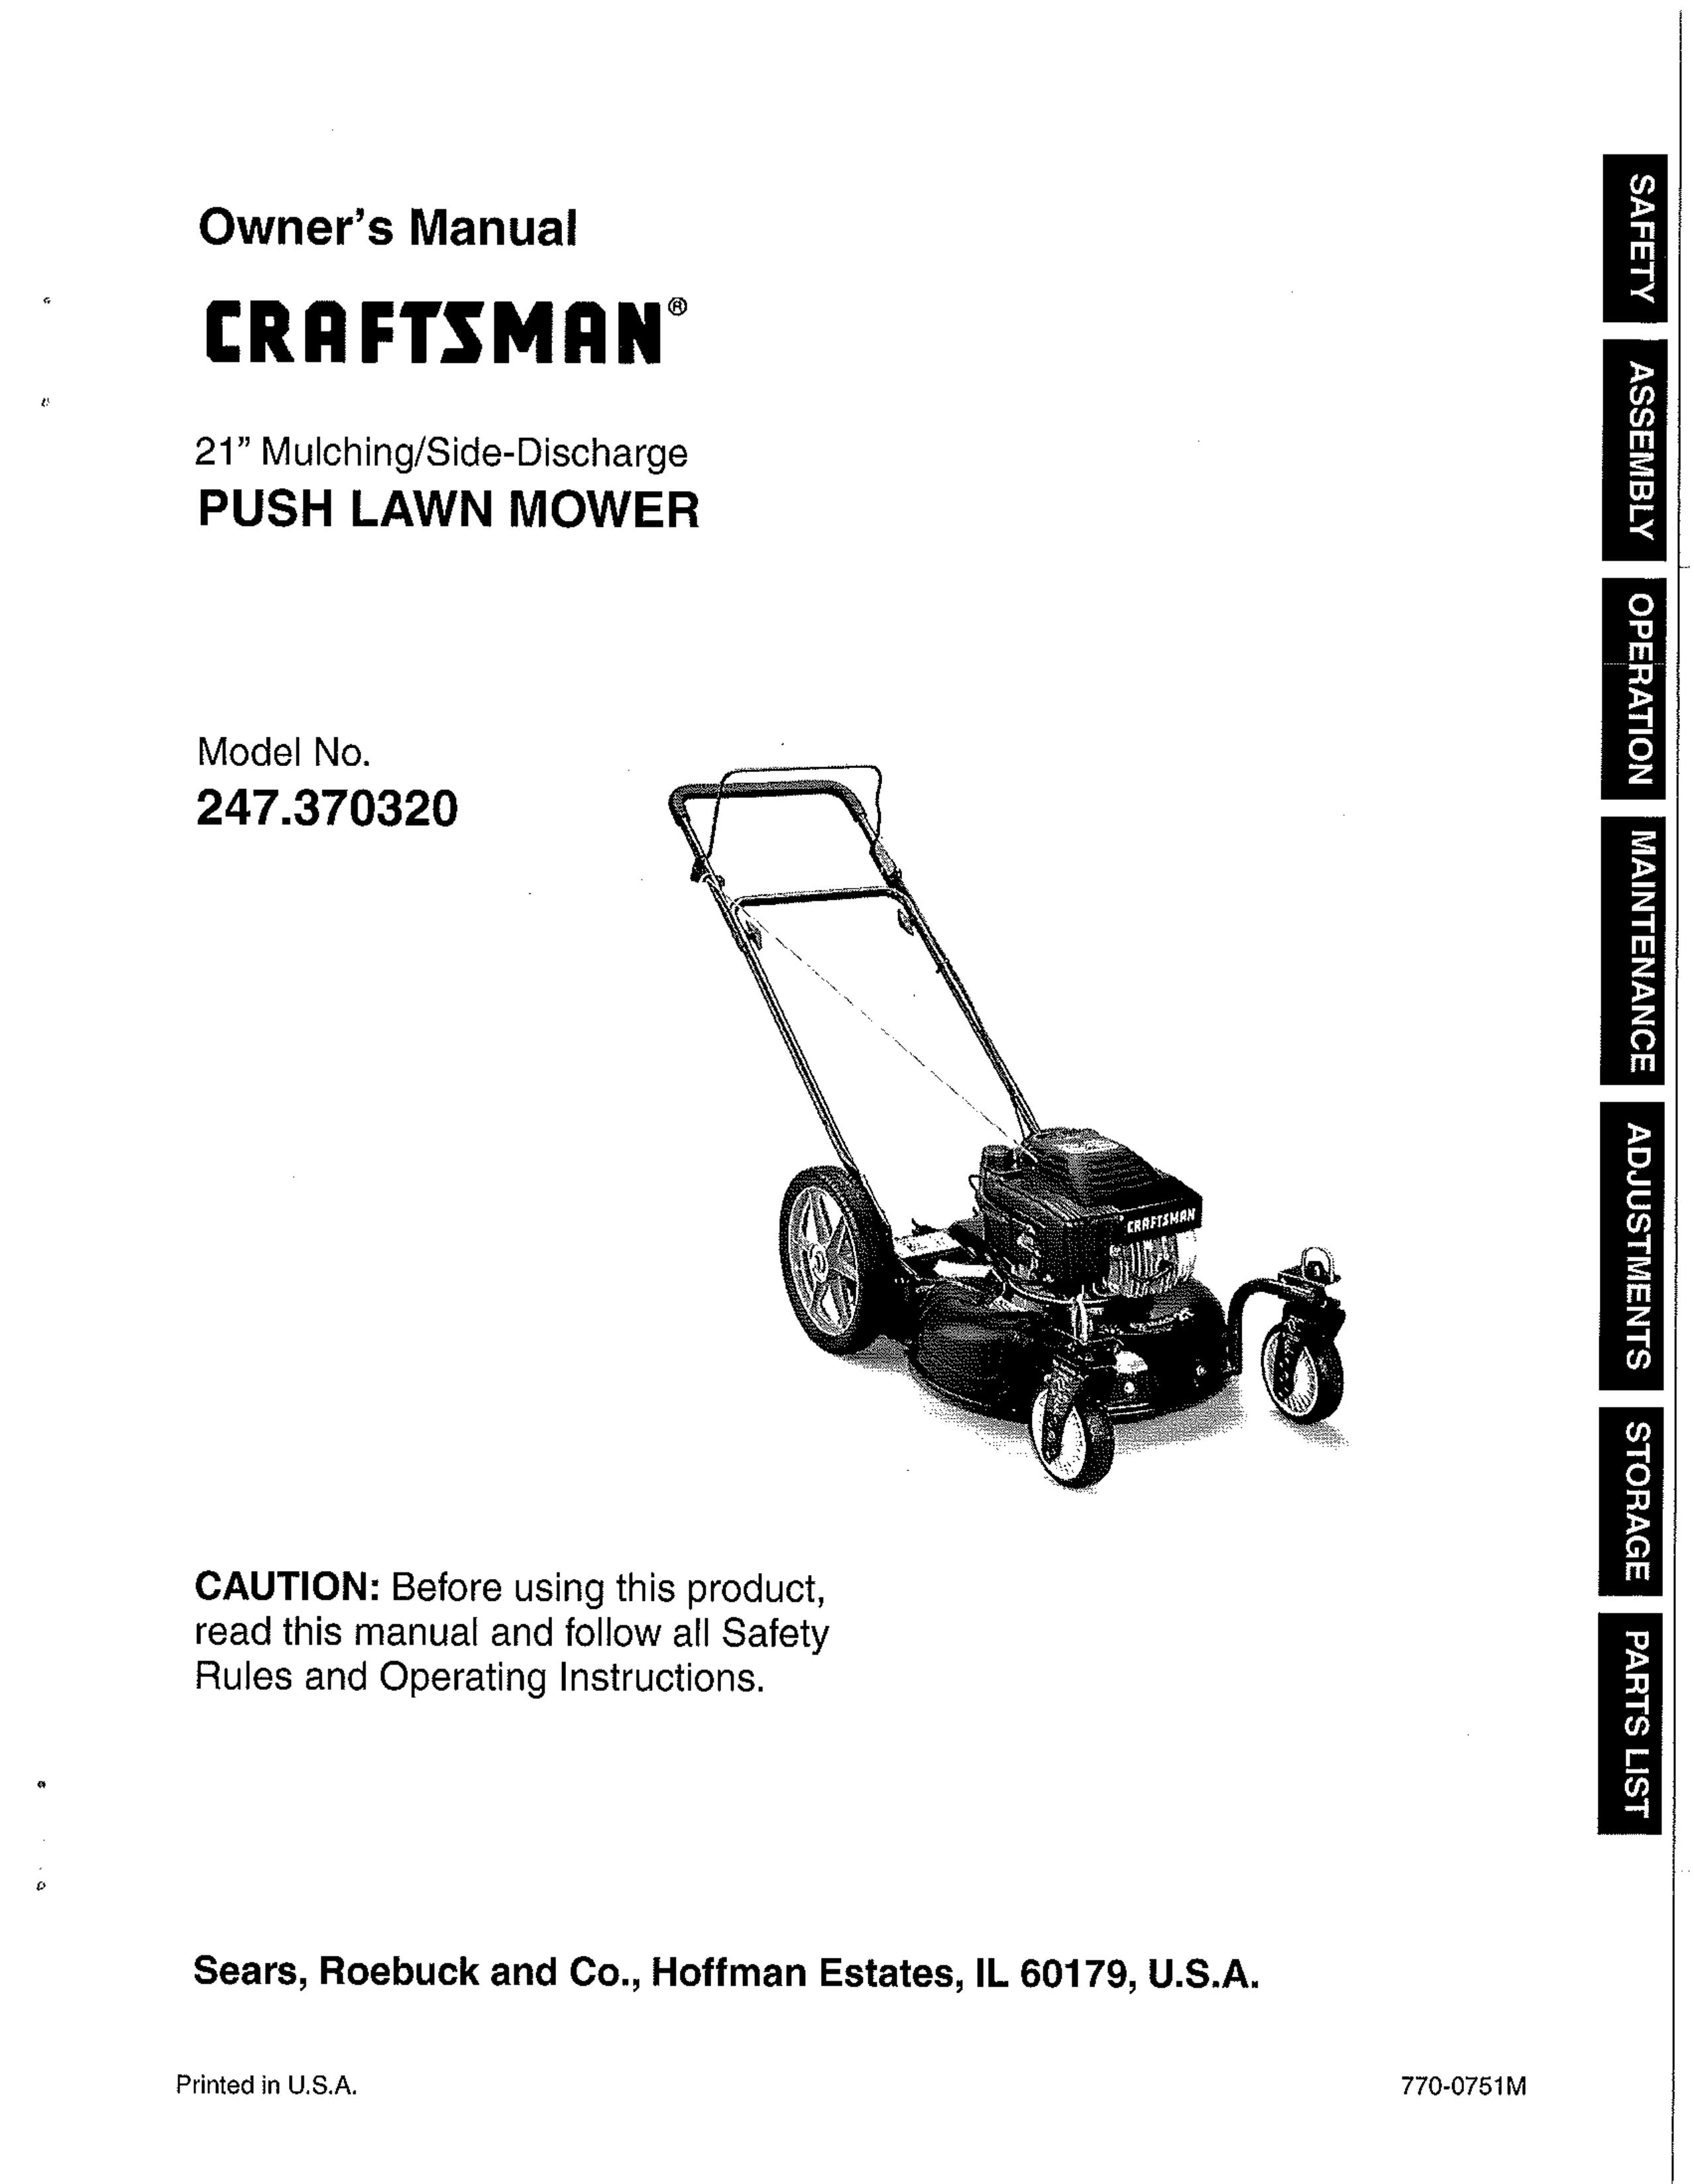 Craftsman 247.37032 Lawn Mower User Manual